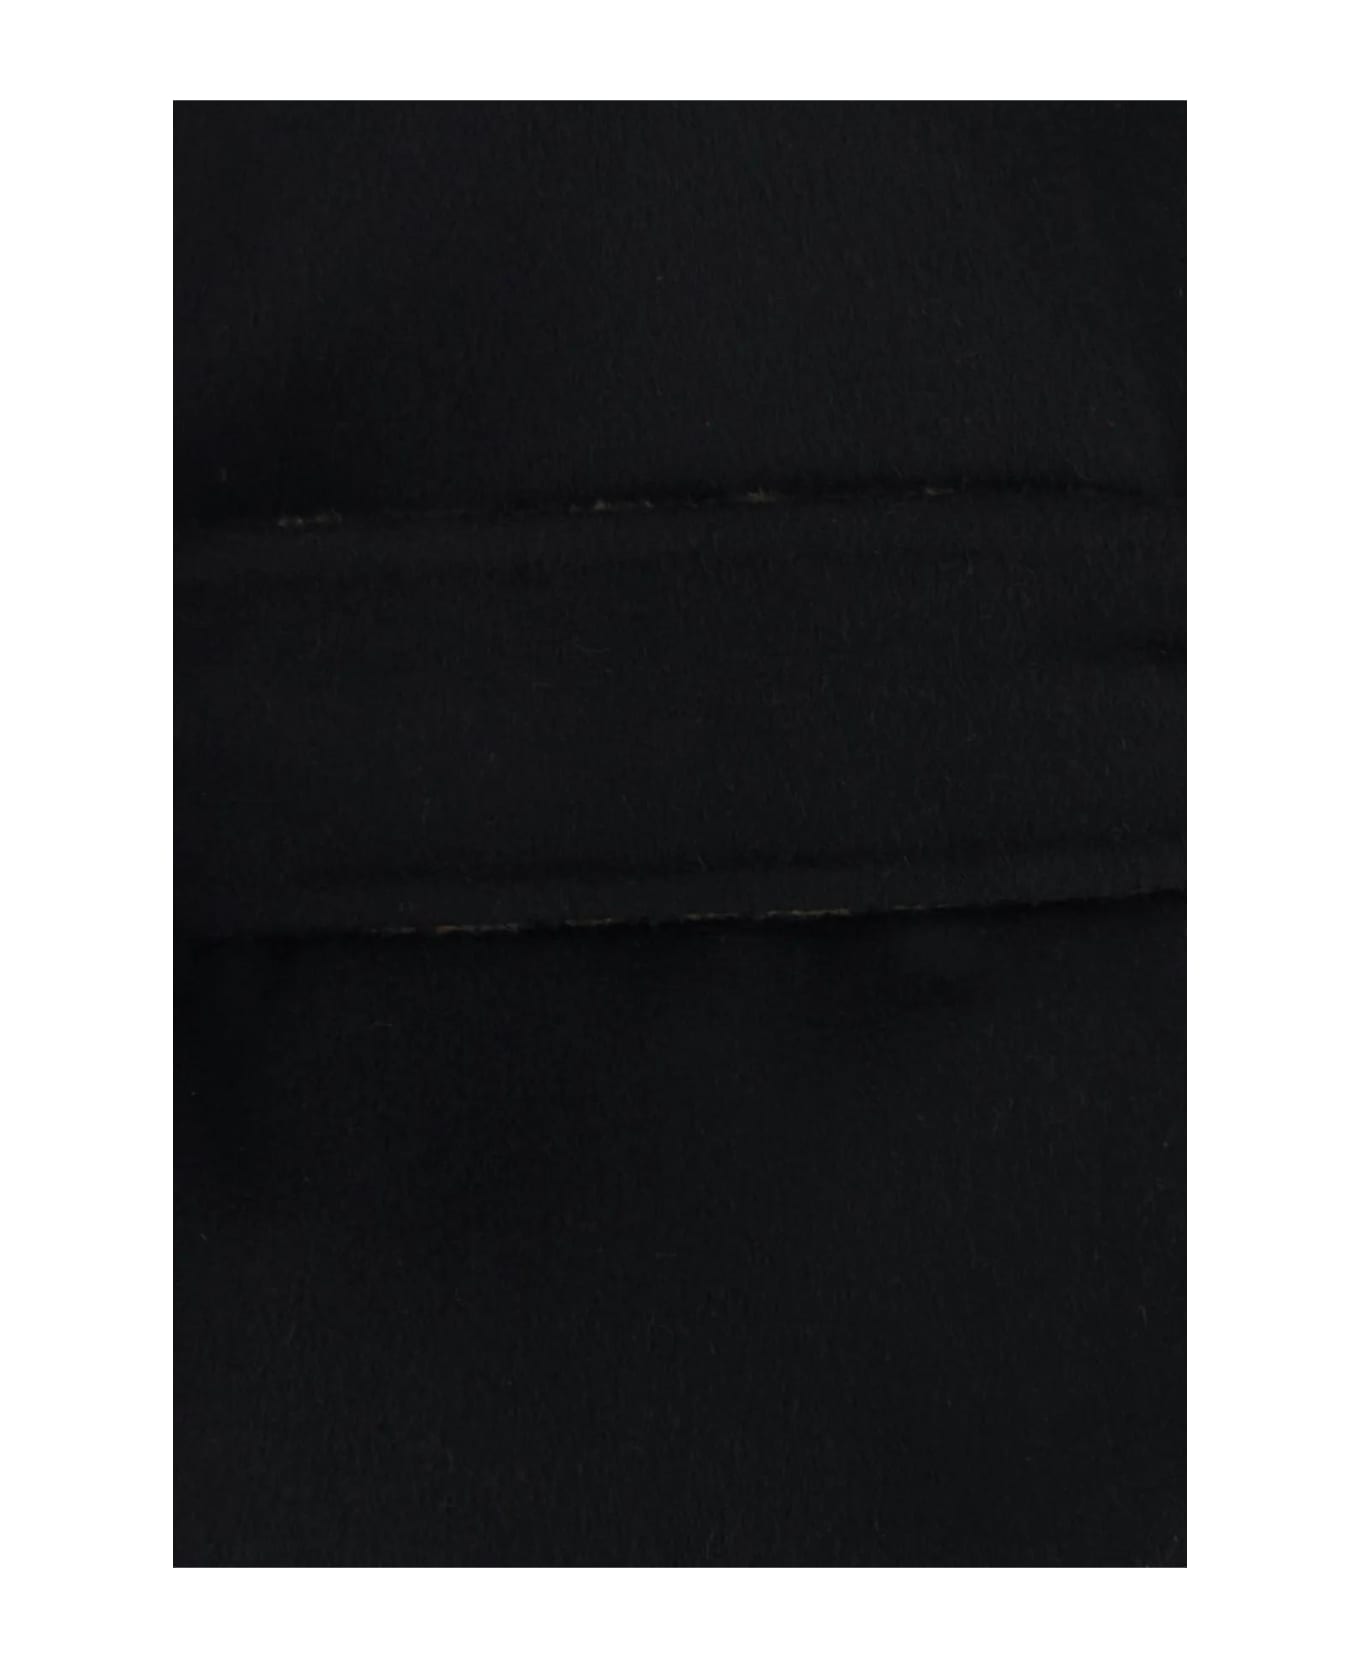 Valentino Black Wool Blend Coat - BLACK/CAMEL コート